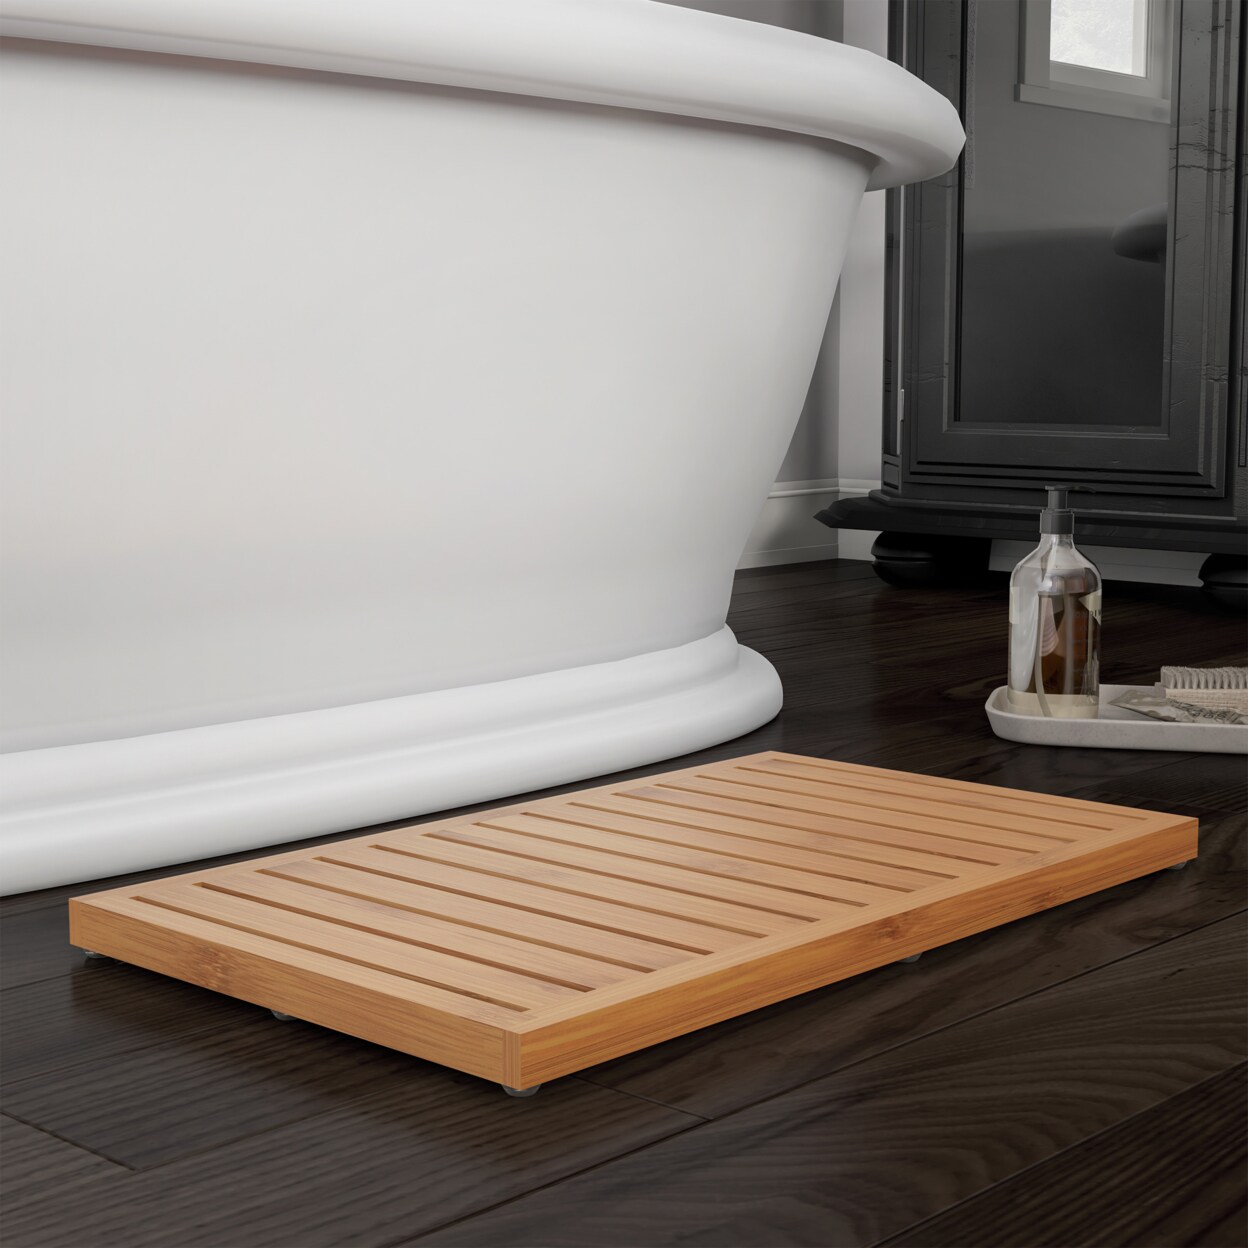 Lavish Home Bamboo Bath Mat Eco-Friendly Natural Wooden Non-Slip Slatted Design Mat for Indoor and Outdoor Bathtub Shower Sauna Pool